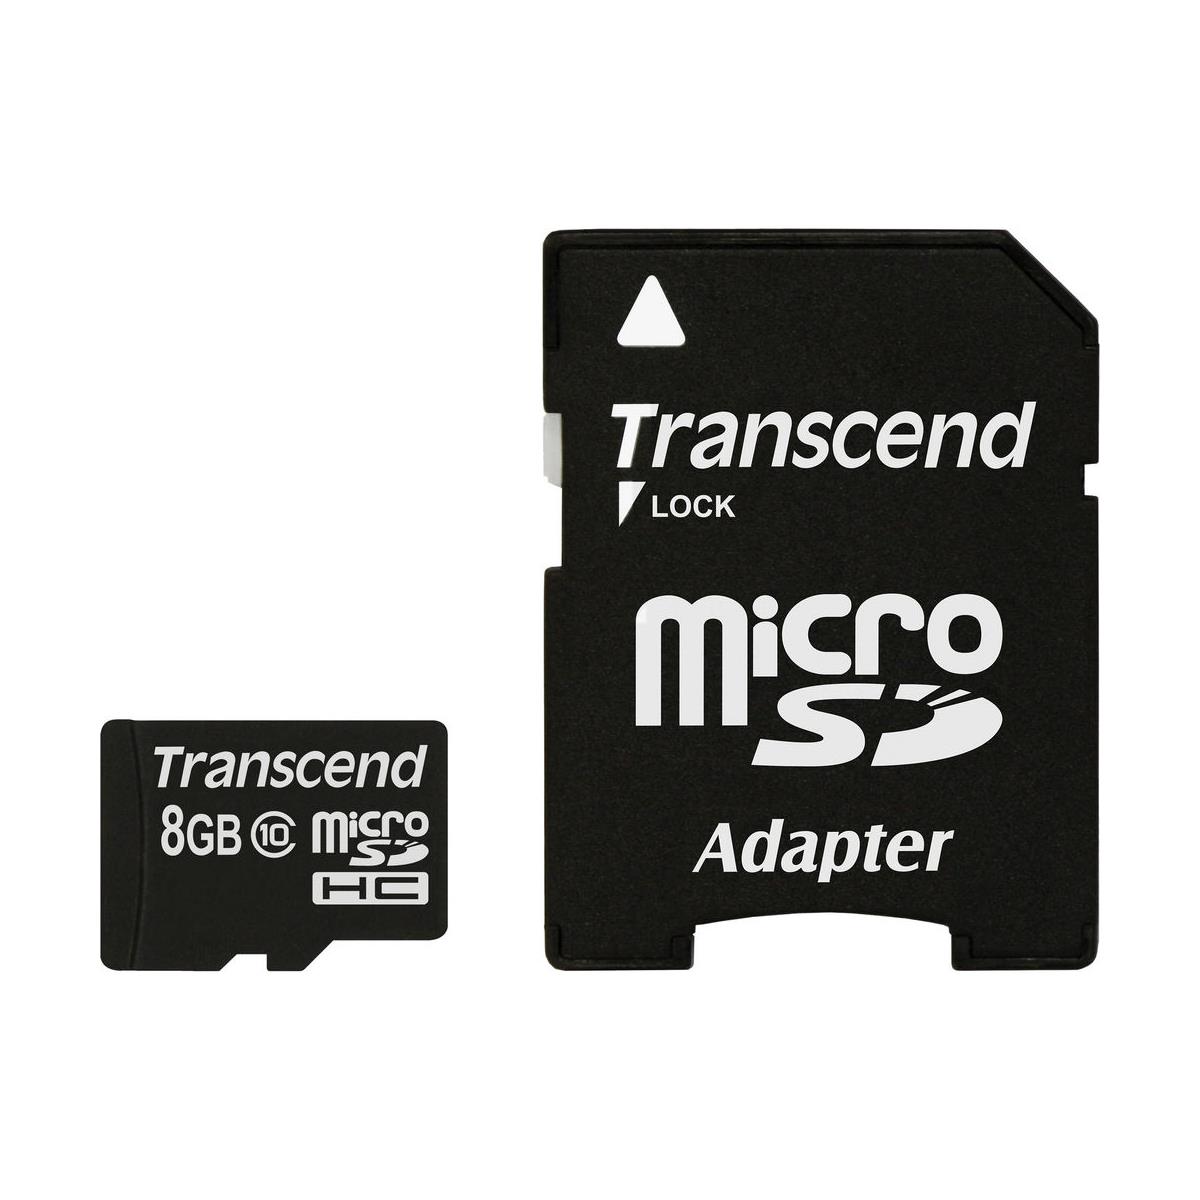 

Transcend 8GB Class 10 UHS-I U1 microSDHC Memory Card + Adapter